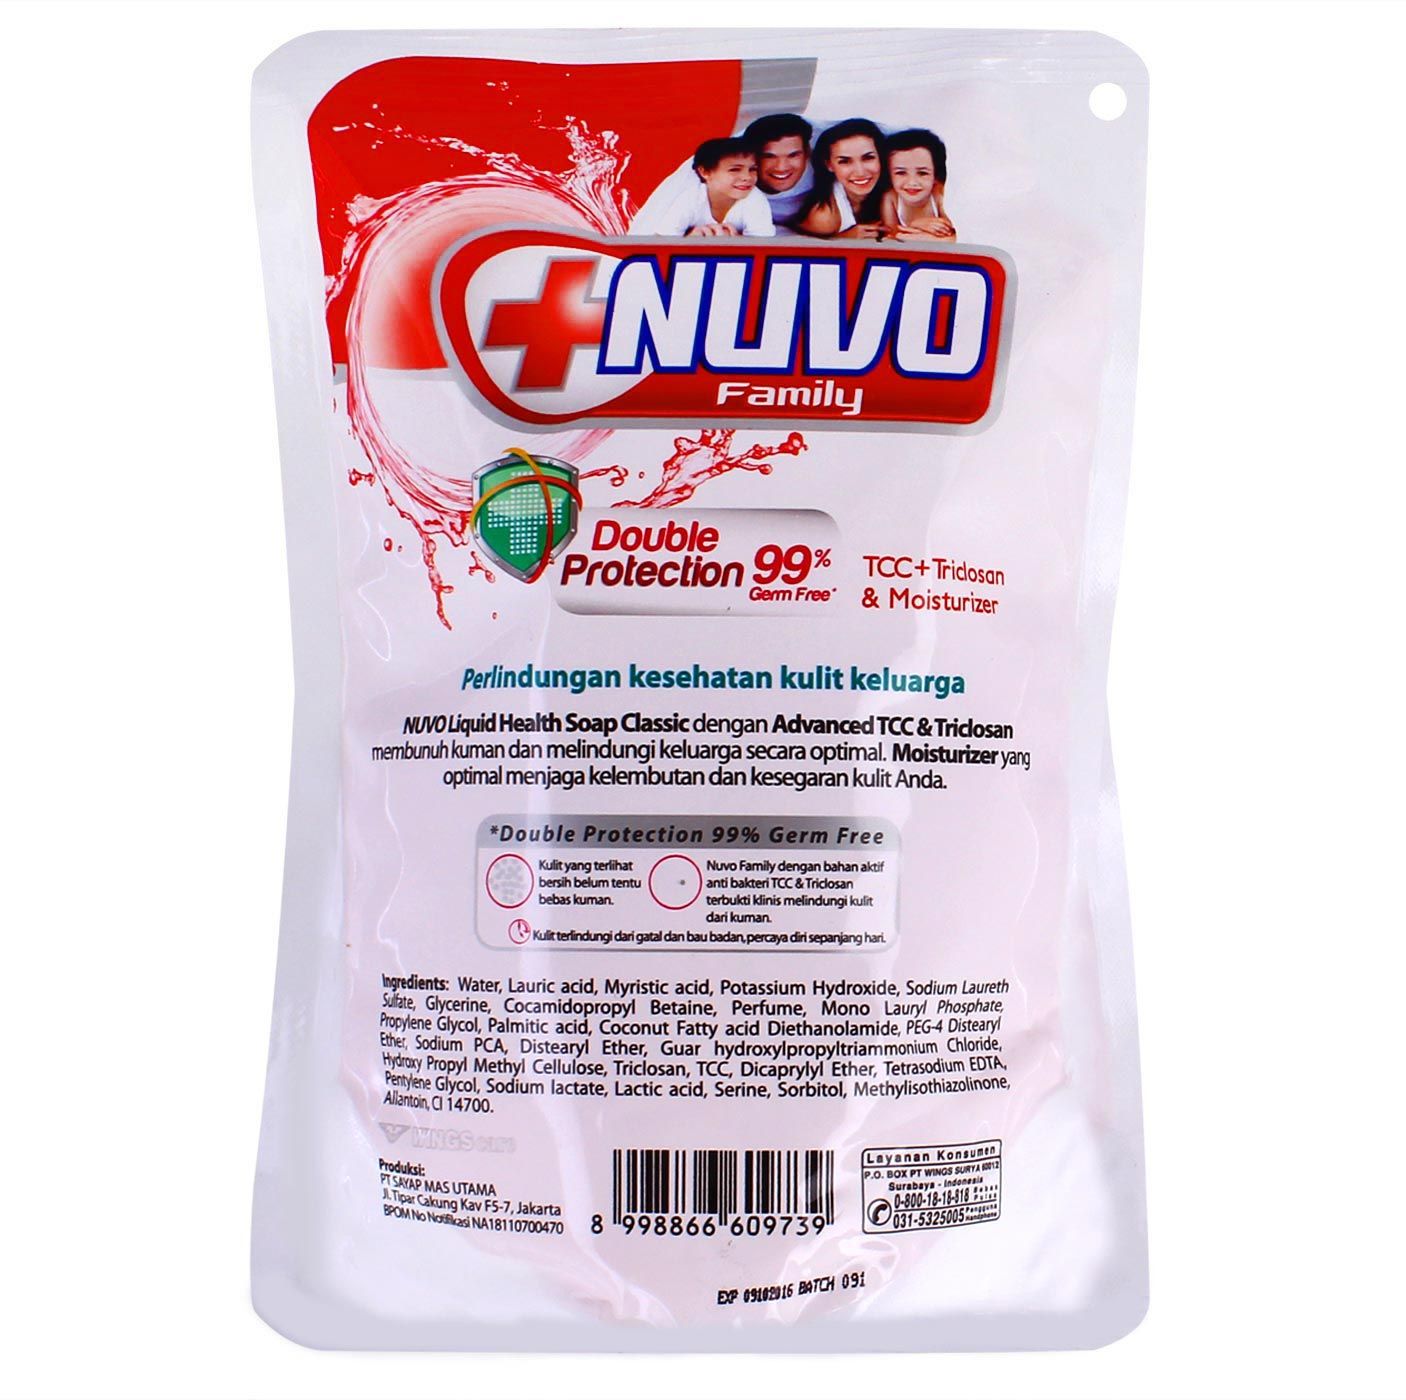 Nuvo Family Liq Soap Merah Pch 450ml - 2